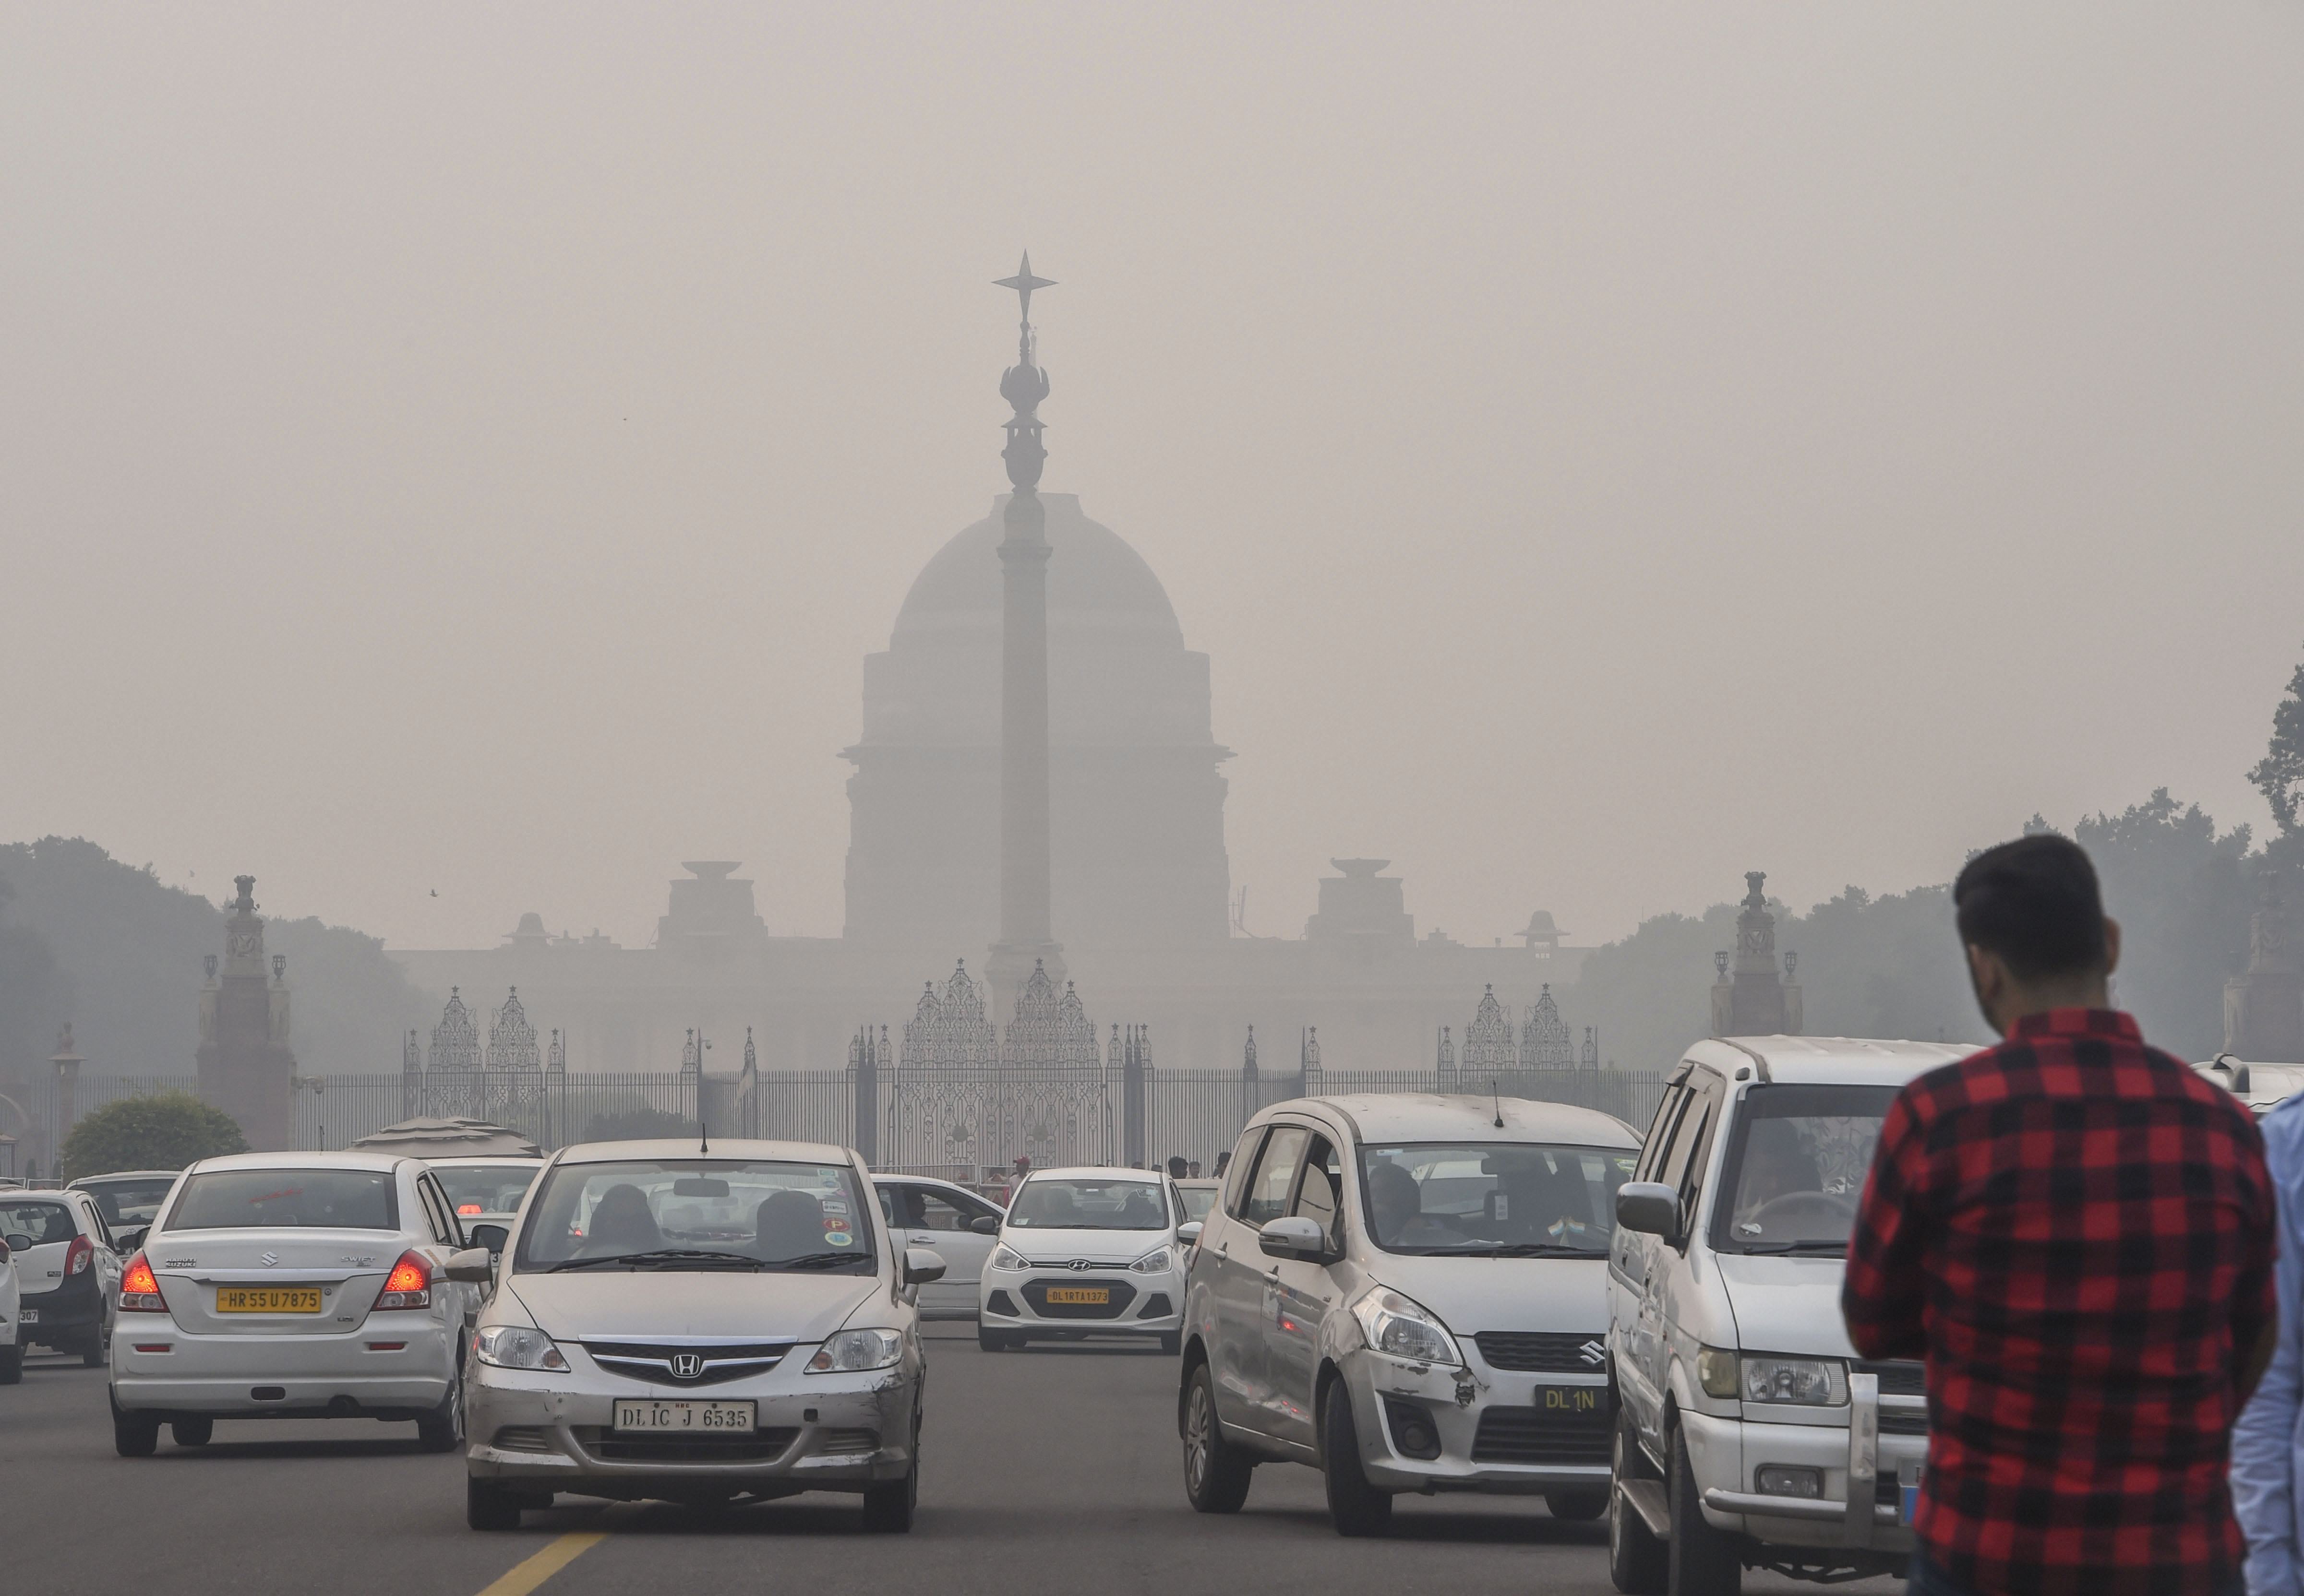  Vehicles ply on Rajpath as smog shrouds Rashtrapathi Bhawan, in New Delhi, Wednesday, November 13, 2019. 